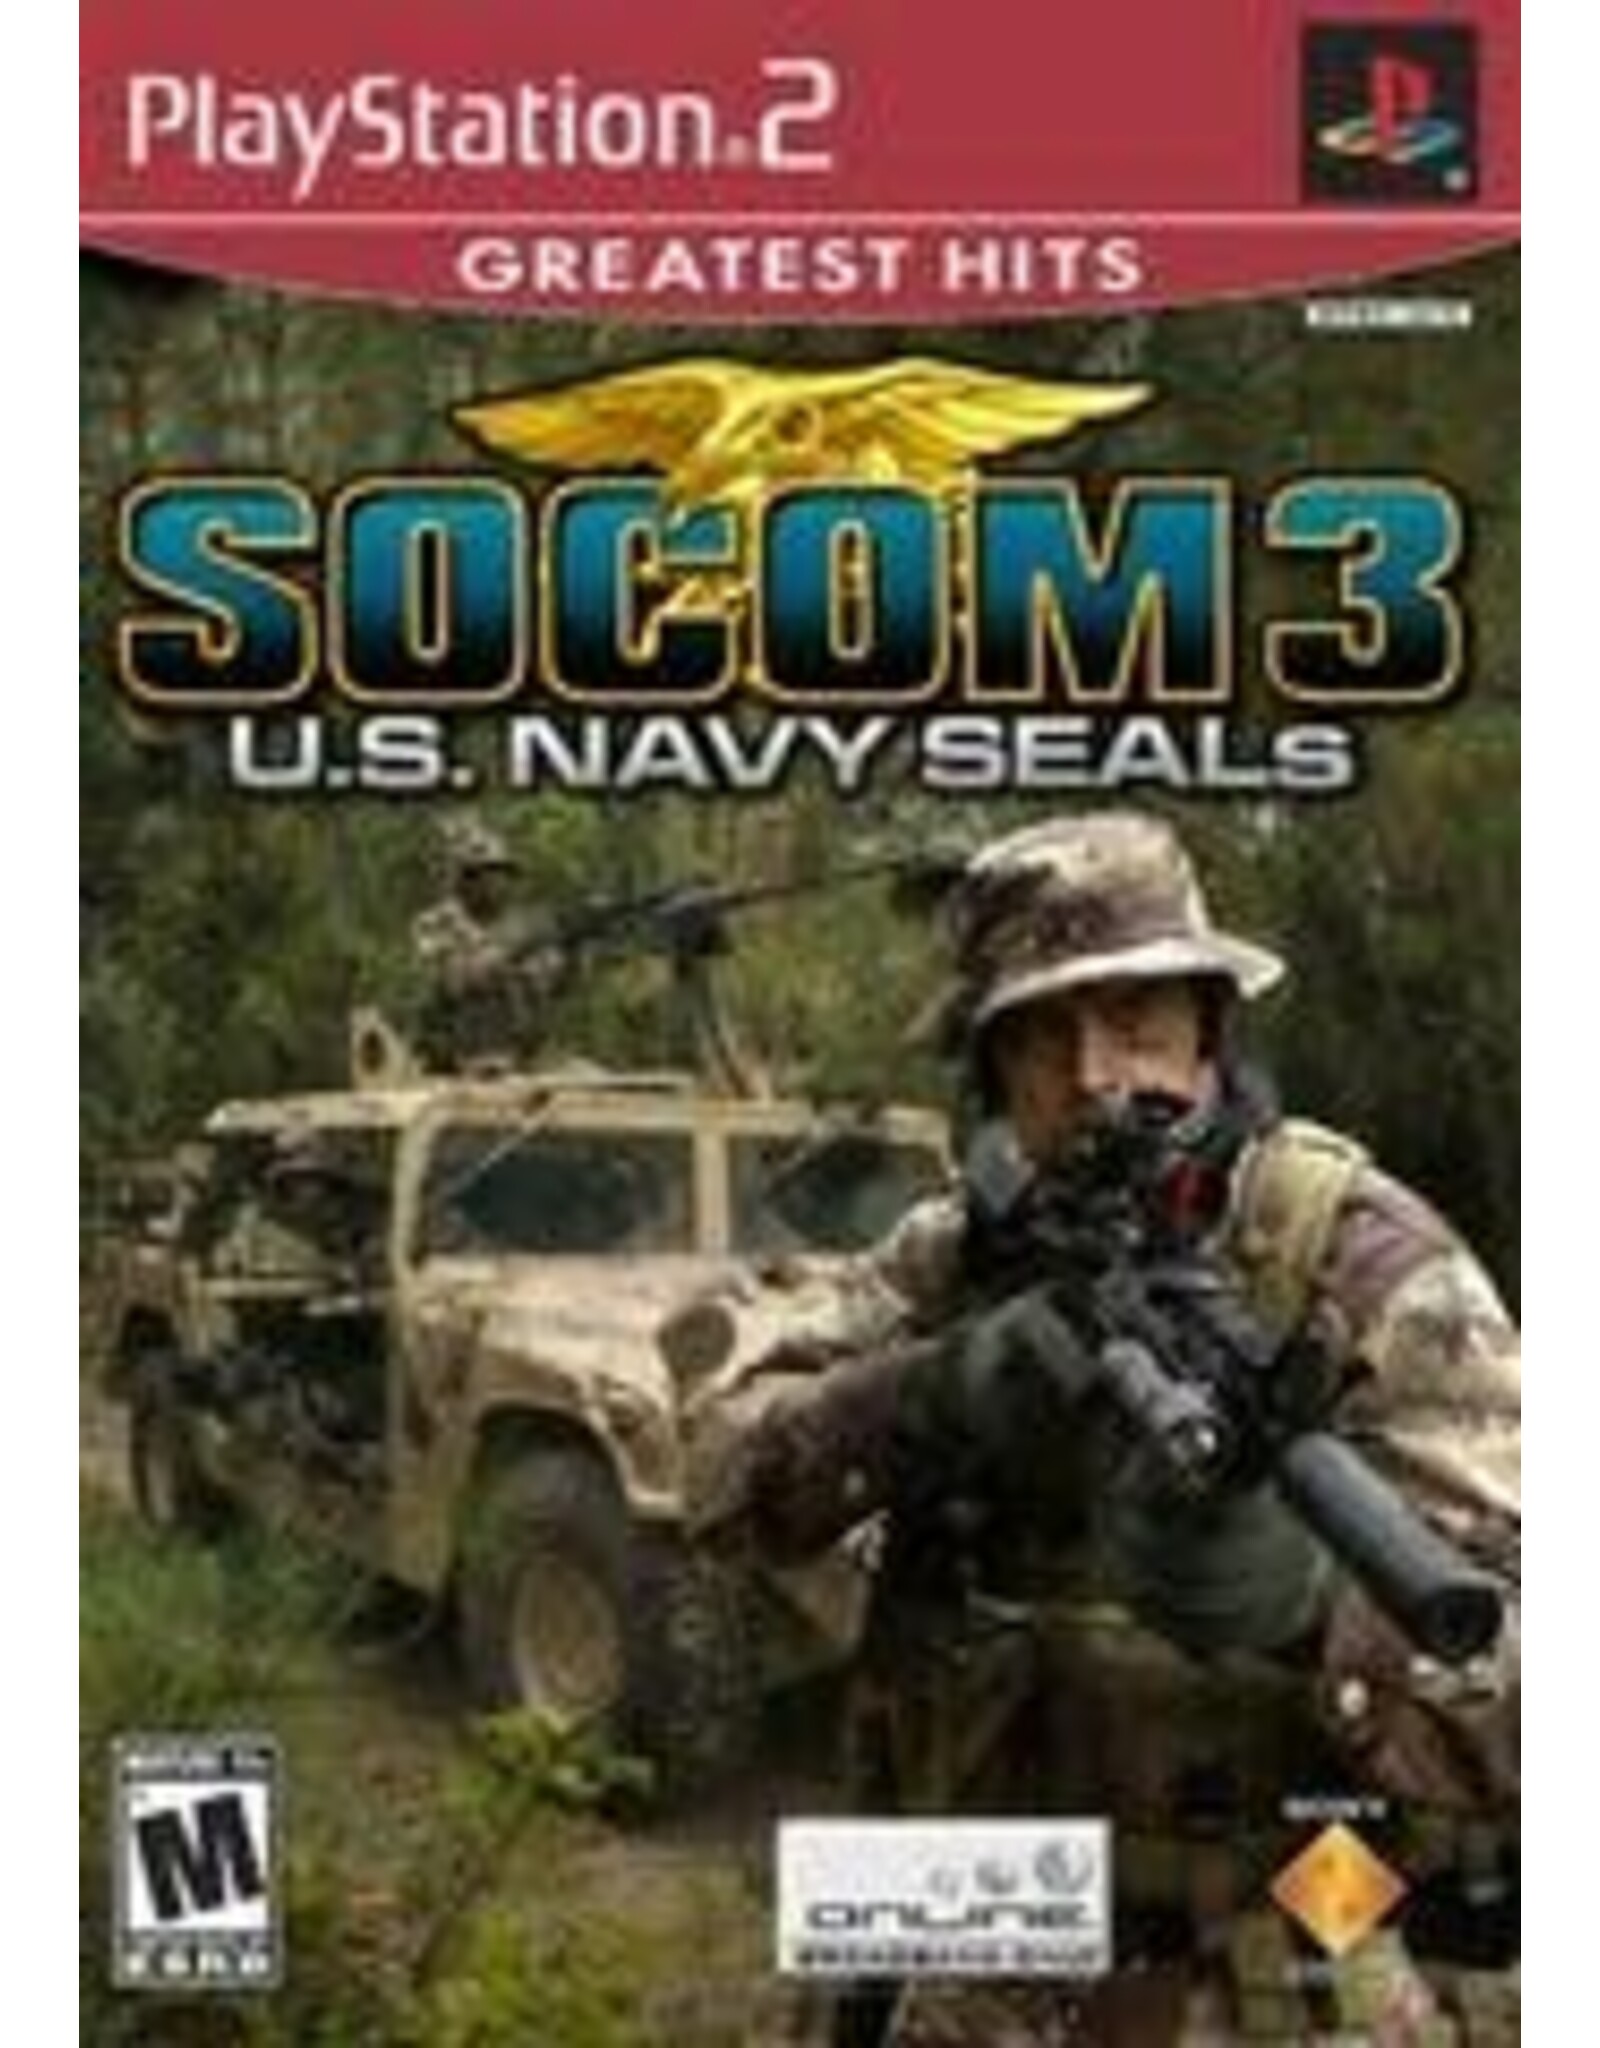 Playstation 2 SOCOM 3 US Navy Seals (Greatest Hits, CiB)